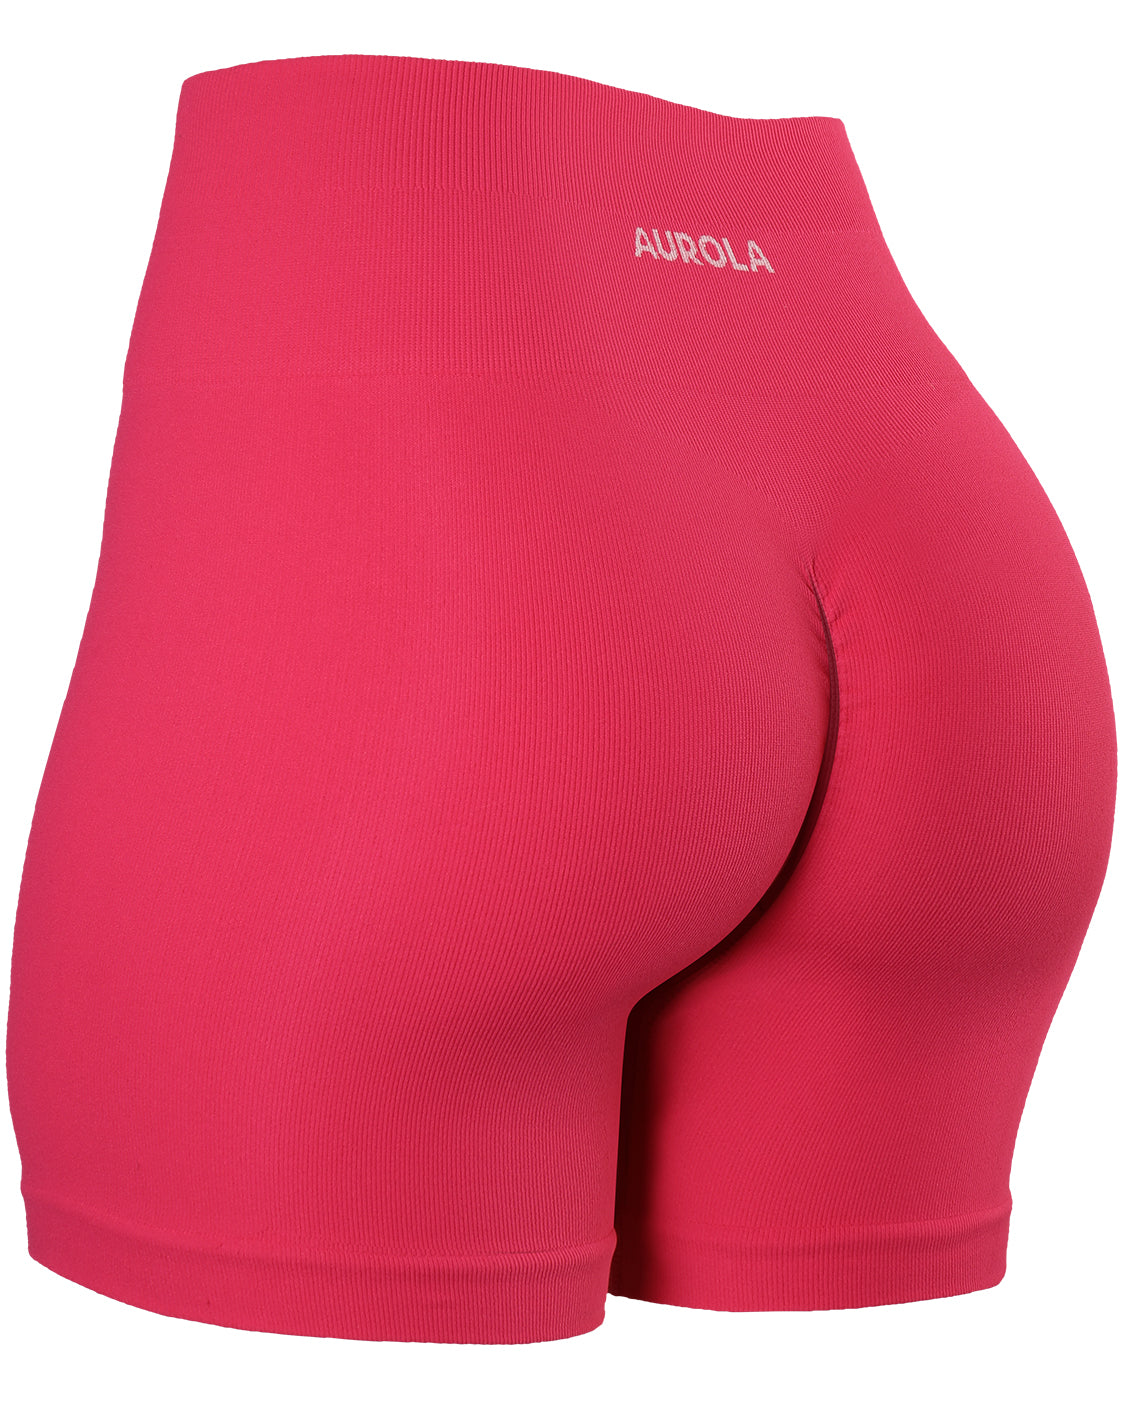 Aurola Gym Shortswomen's High Waist Yoga Shorts - Buttery Soft Stretchy  Gym Biker Shorts